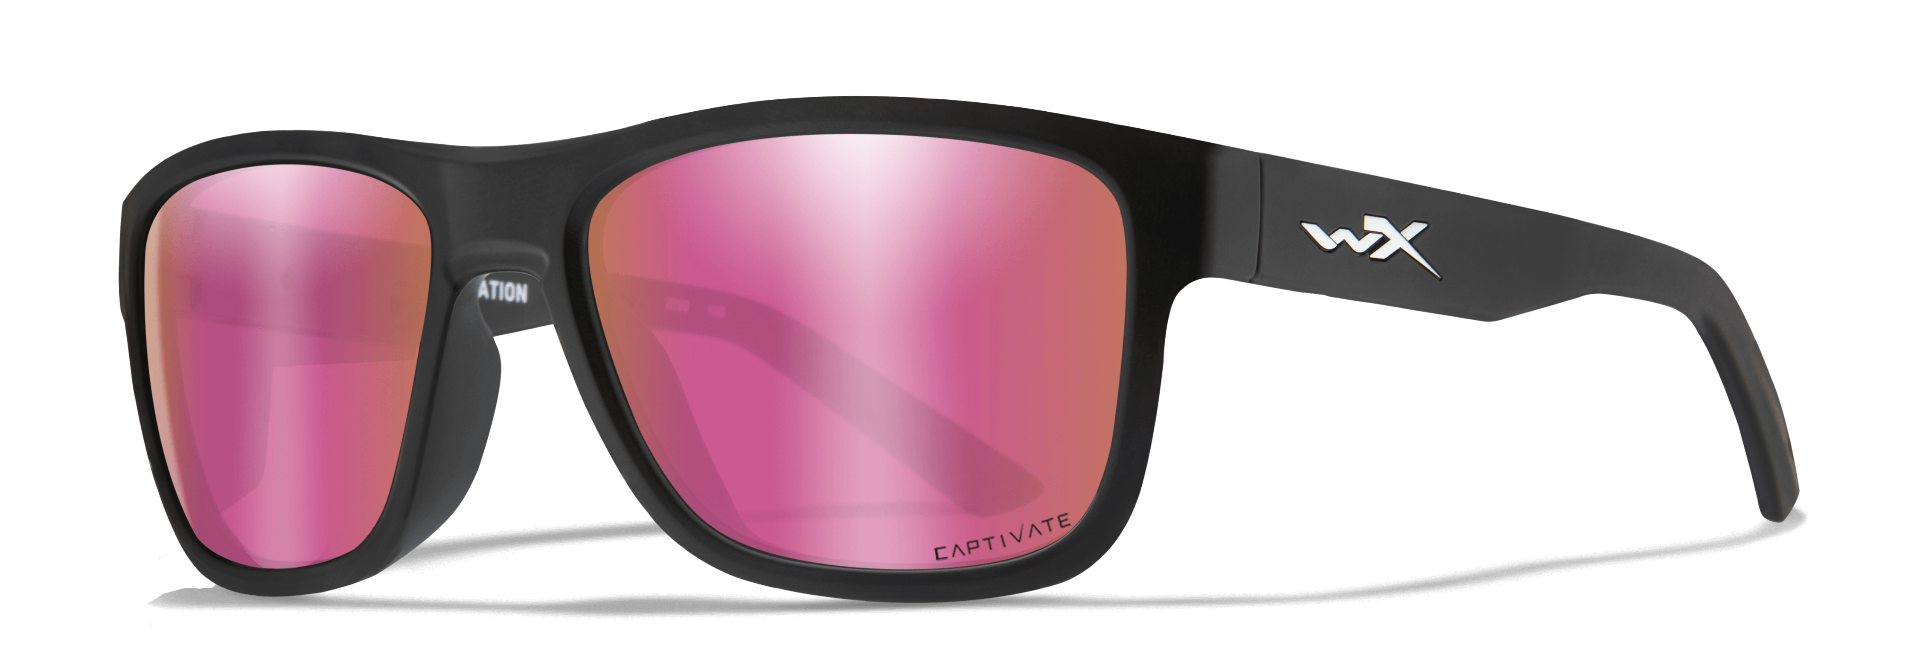 X Ovation Sunglasses | Sportsman Gear